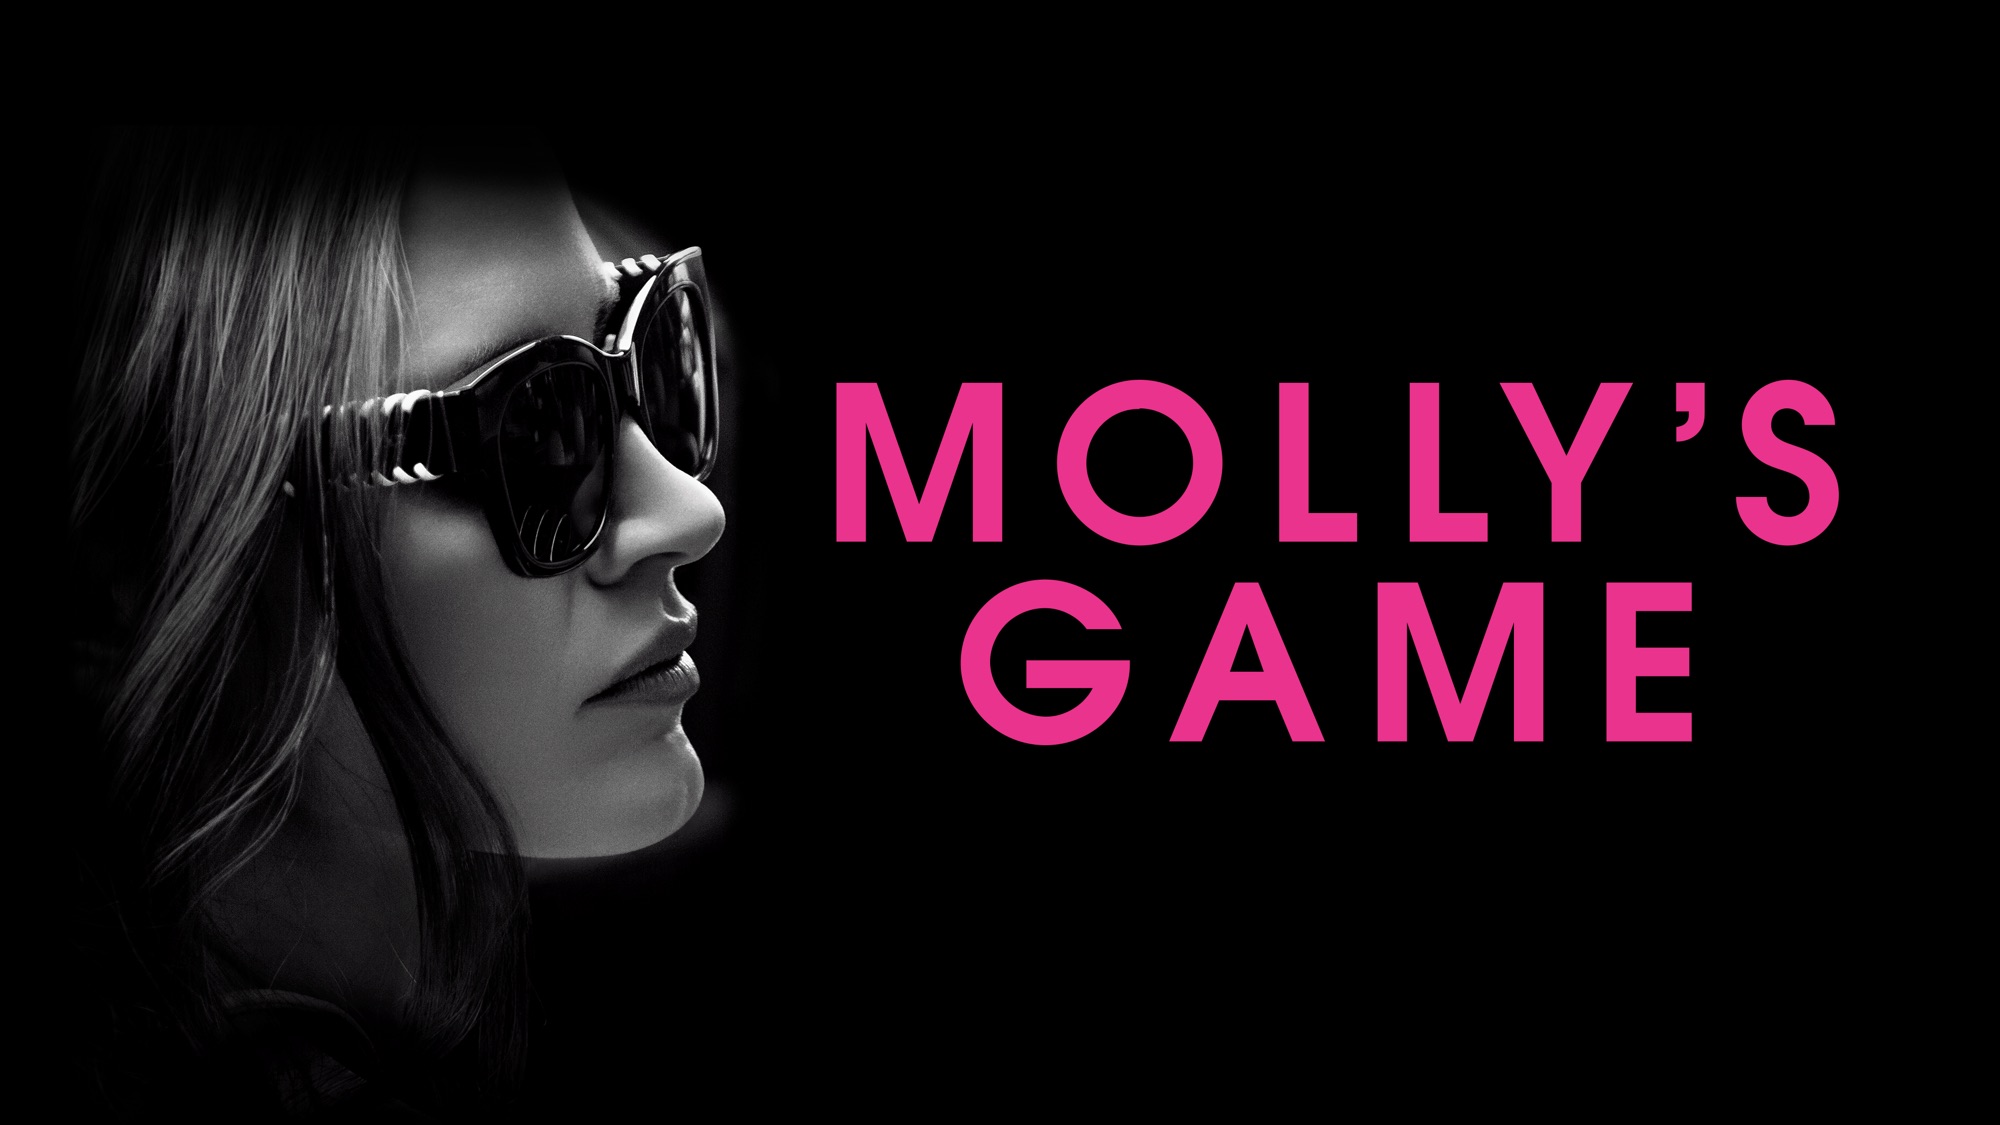 Descargar fondos de escritorio de Molly's Game HD